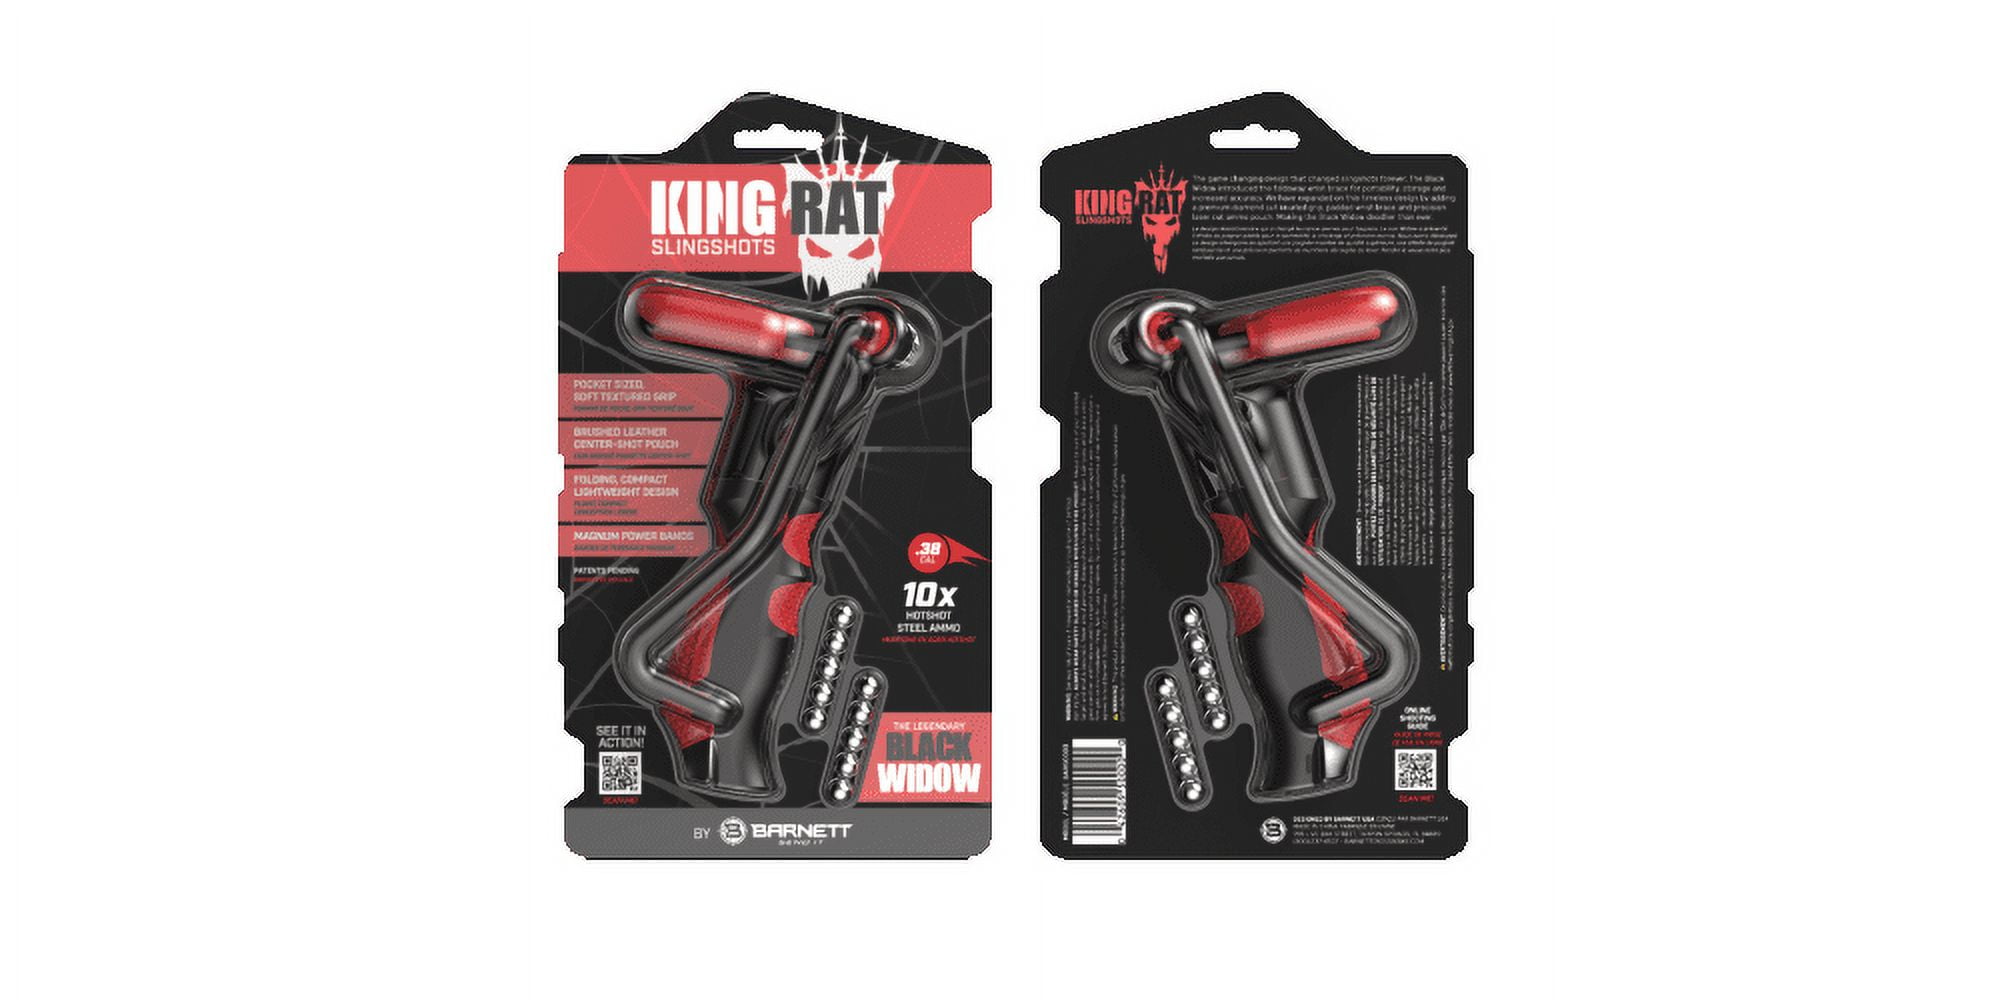 King Rat Black Widow Slingshot - Walmart.com